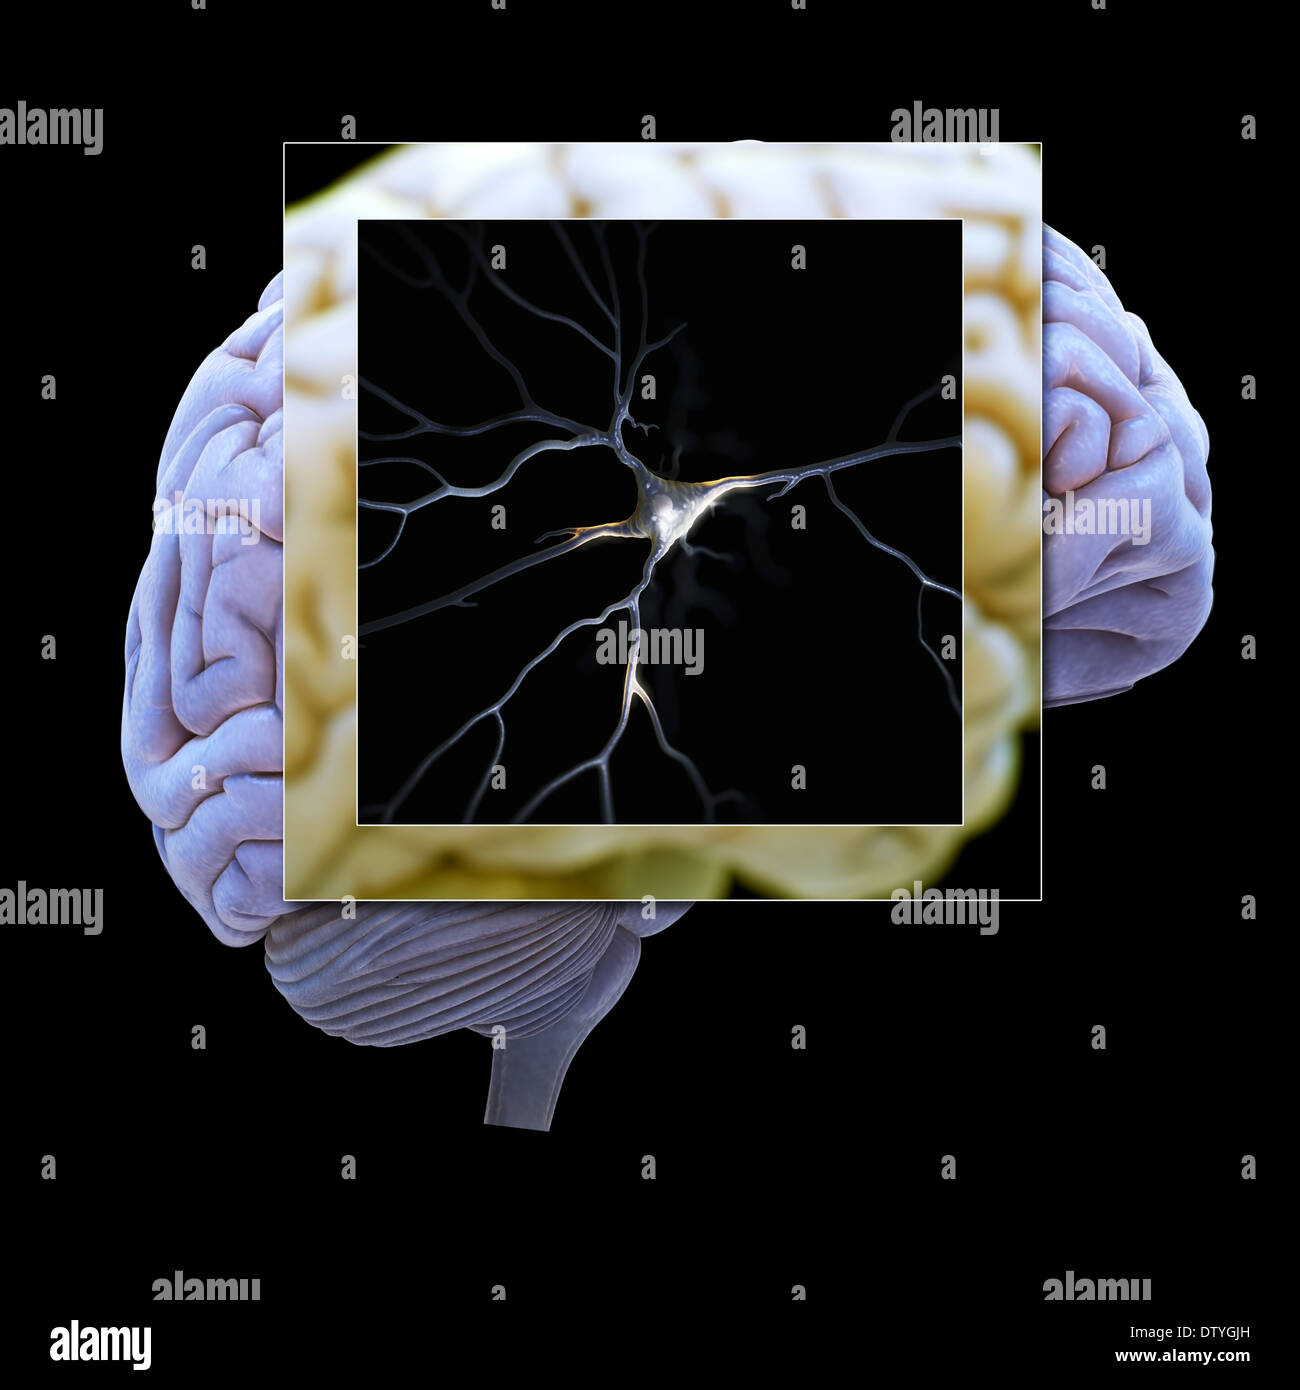 Pyramidal Neuron and Brain Stock Photo